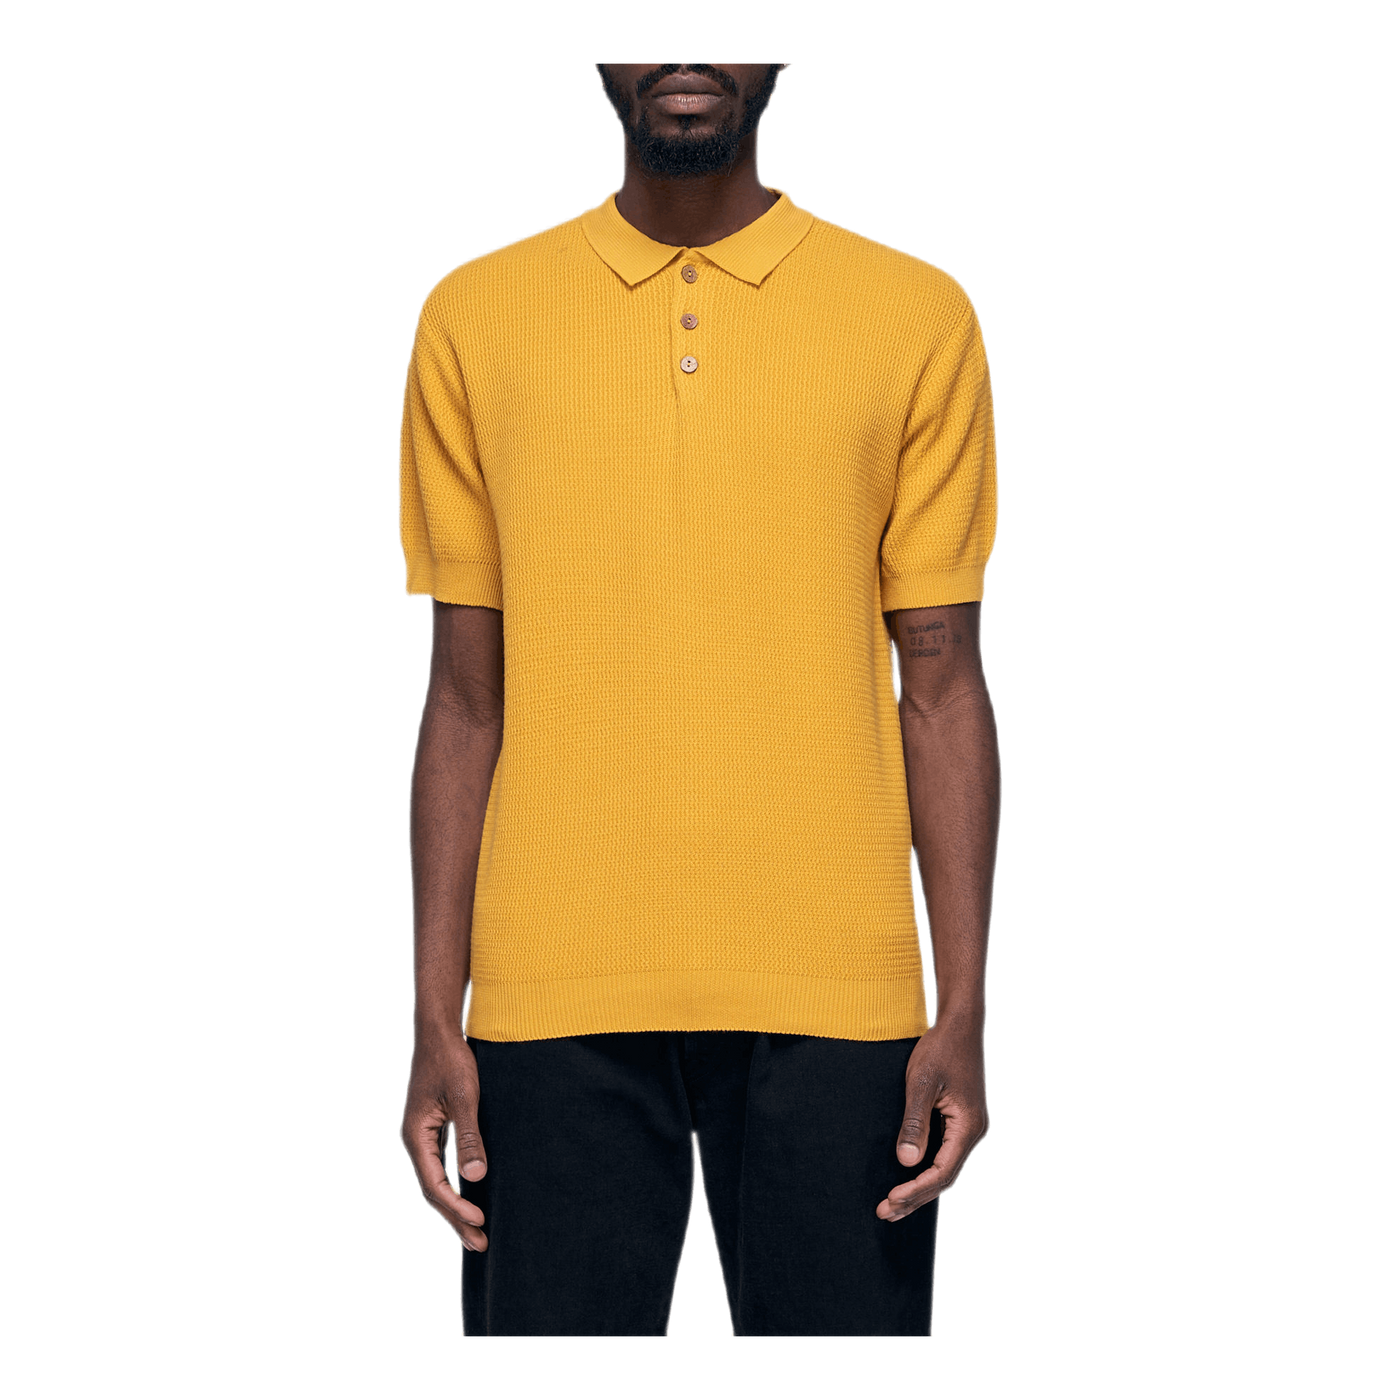 Sweater Short Sleeve Gnesta Yellow